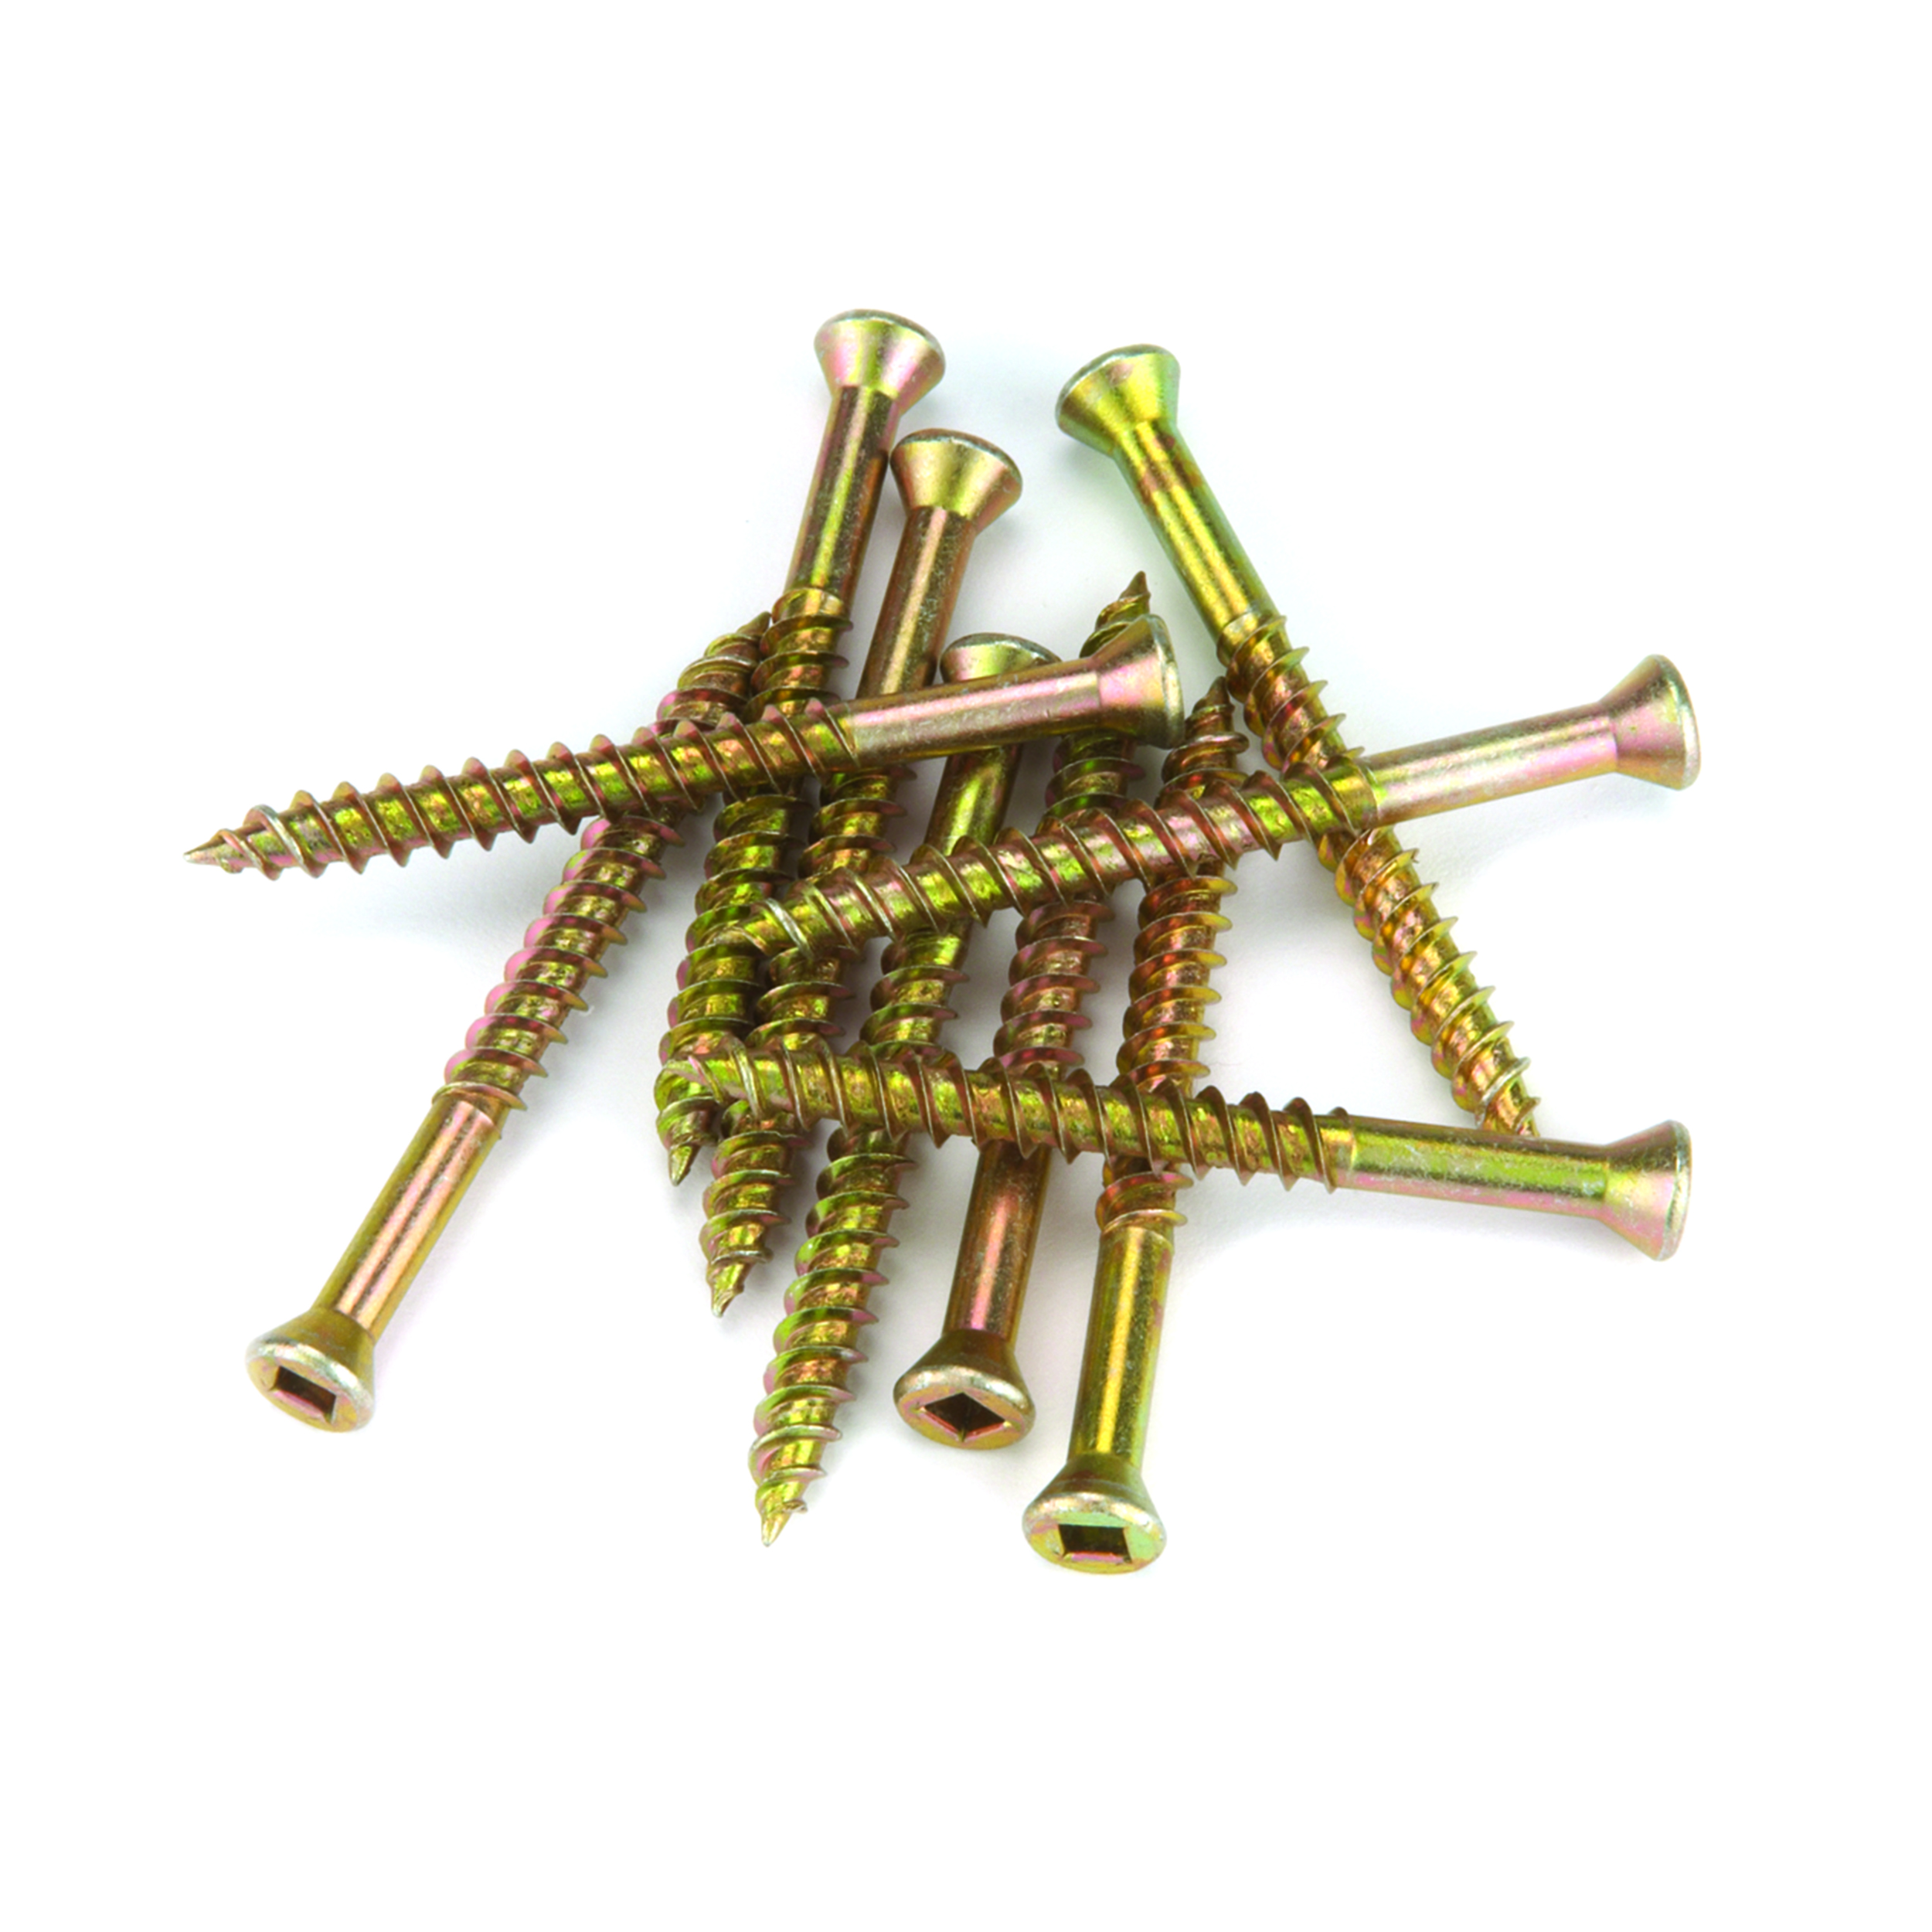 7 X 2-1/4 Square Drive Woodworking Screws, Trim Head, Yellow Zinc, 100-piece